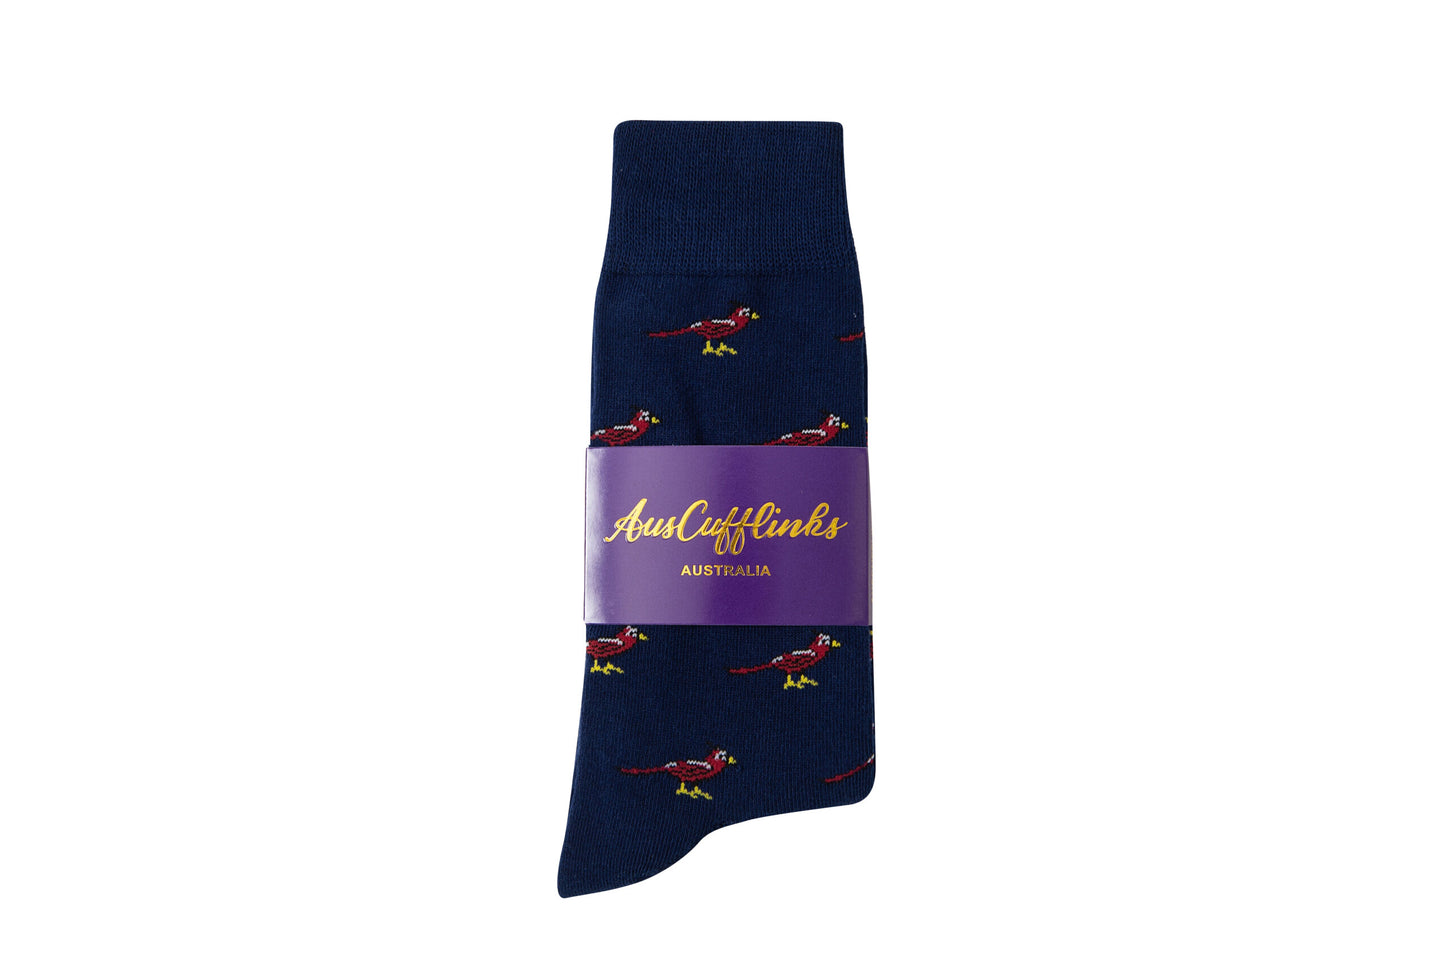 A Cardinal Bird Sock with a purple label.